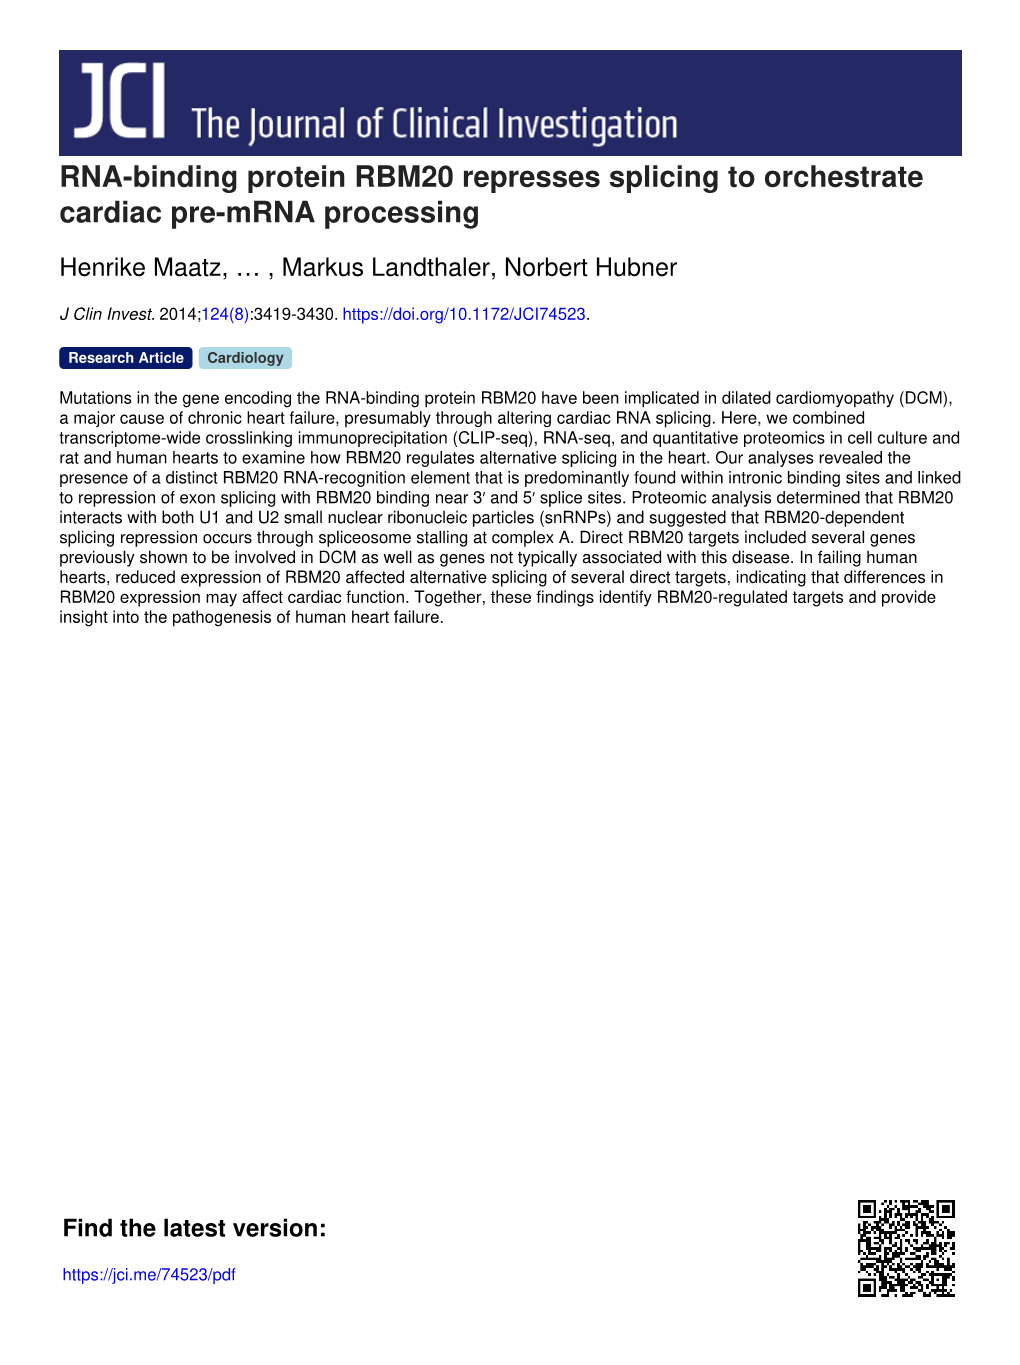 RNA-Binding Protein RBM20 Represses Splicing to Orchestrate Cardiac Pre-Mrna Processing